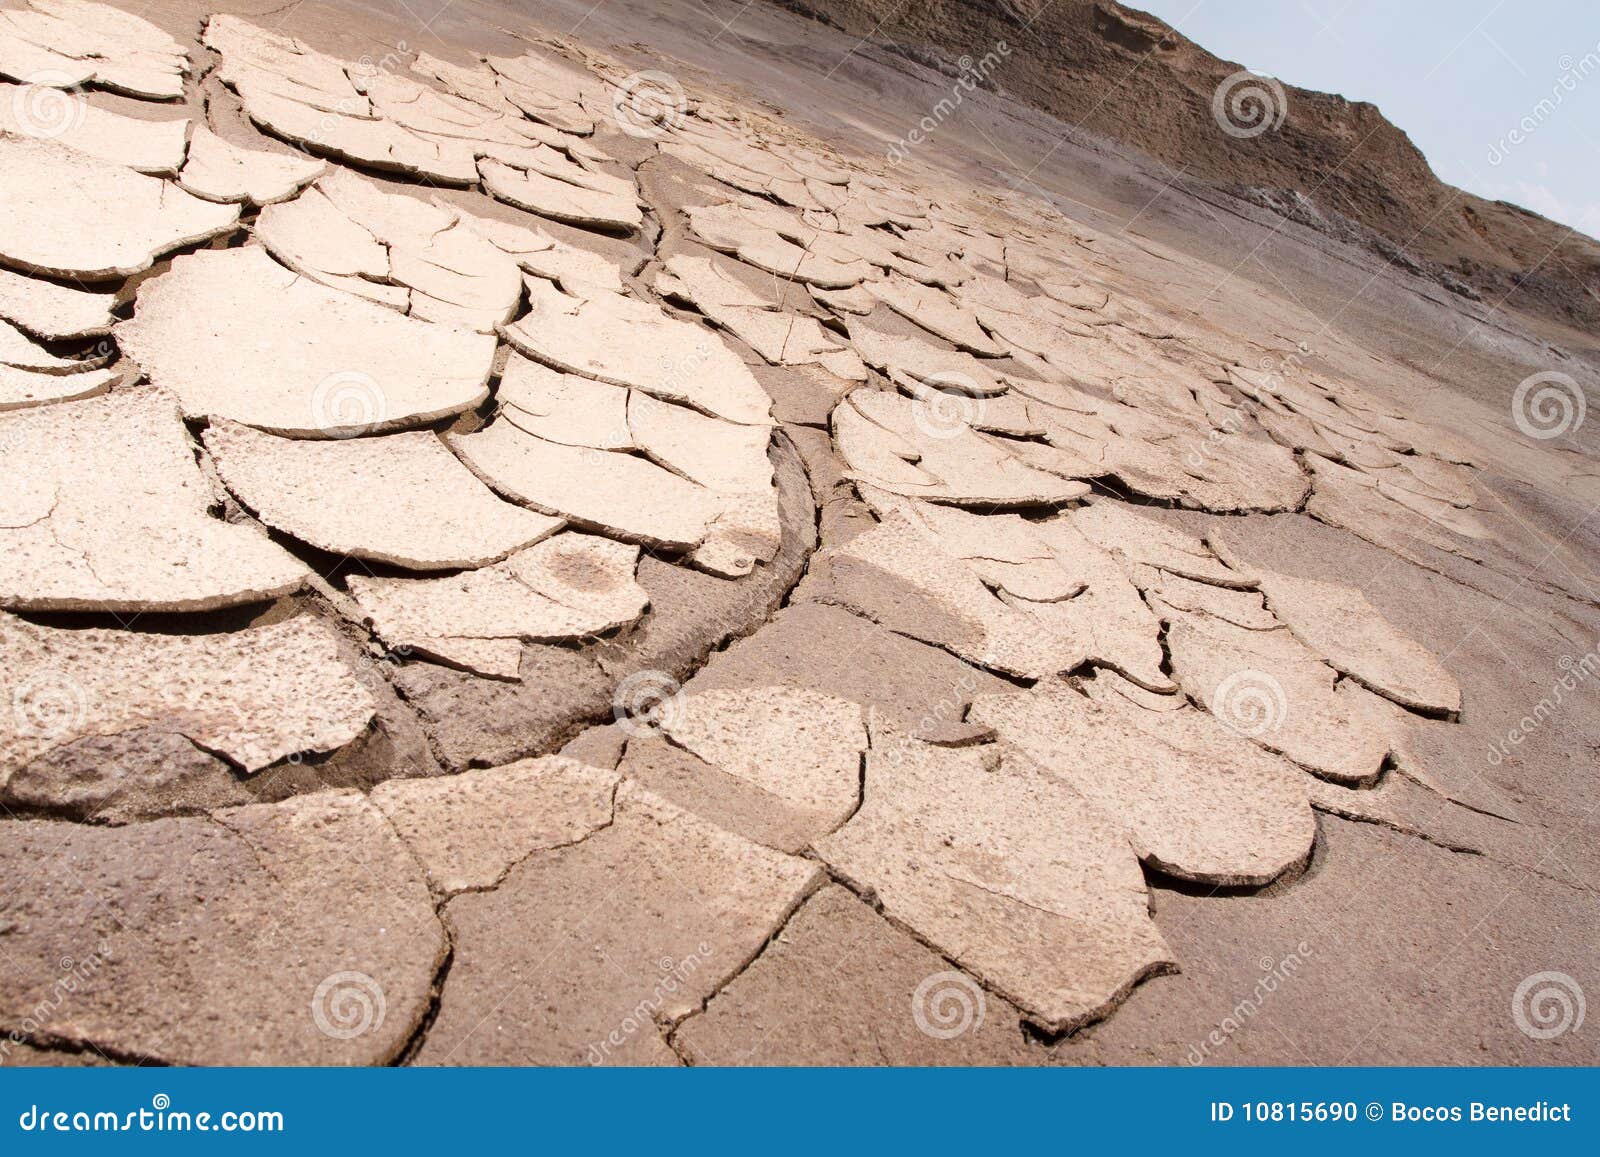 arid cracked earth